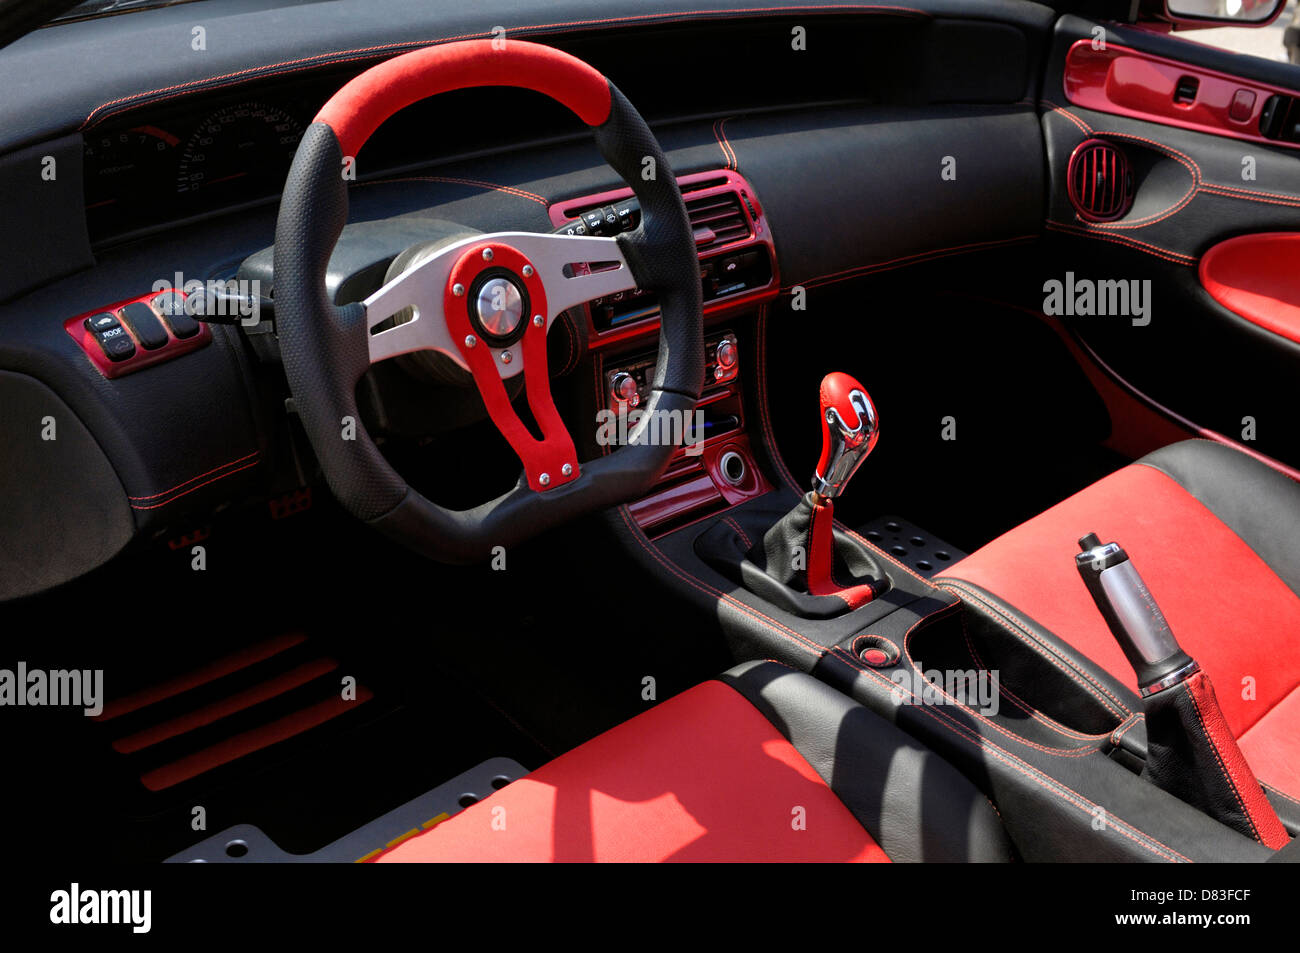 Rotes auto interieur -Fotos und -Bildmaterial in hoher Auflösung – Alamy